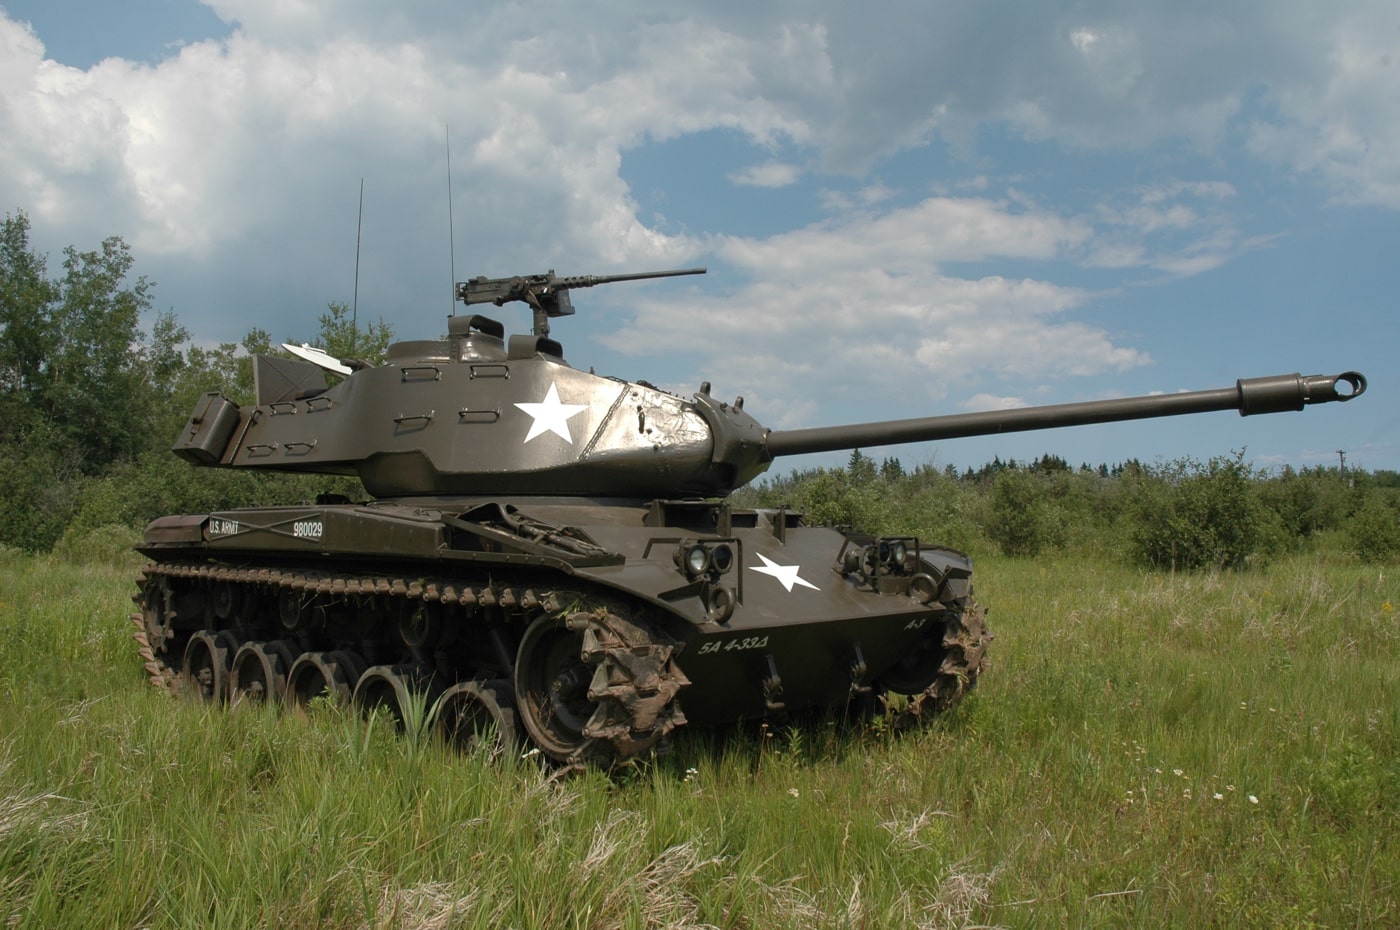 restored m41 tank